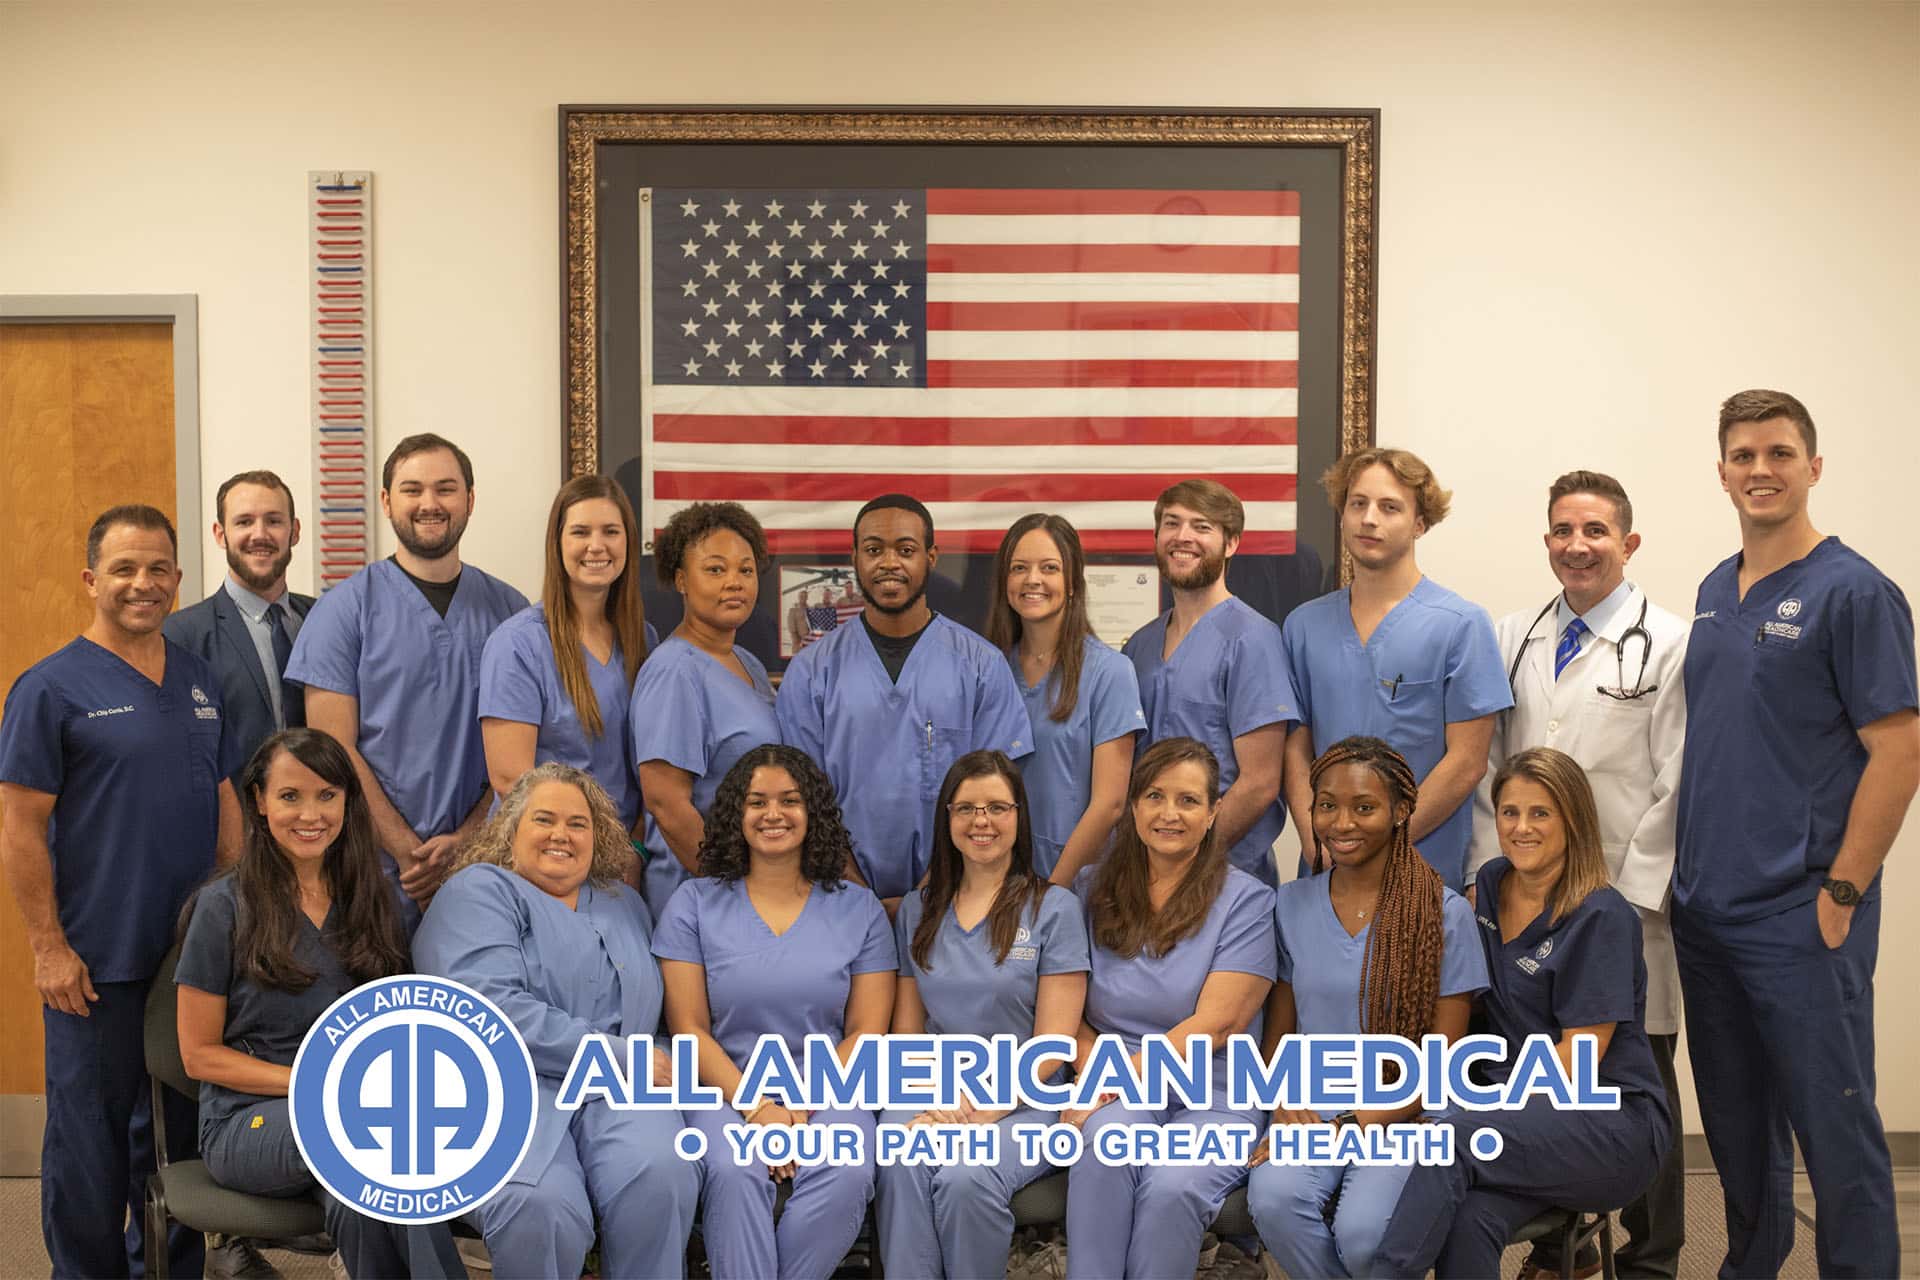 All American Medical Staff